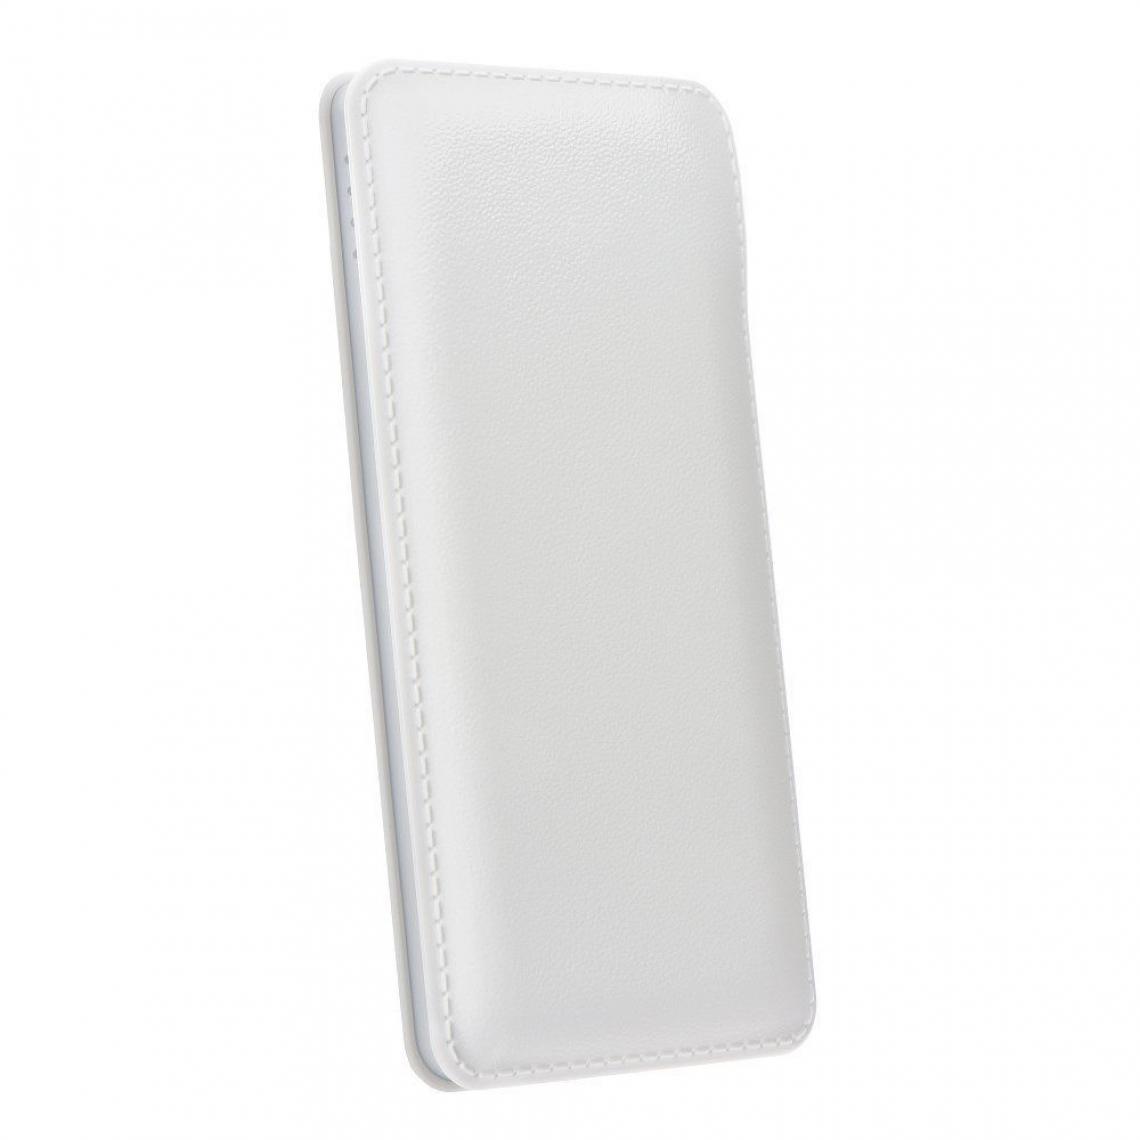 Ozzzo - Chargeur batterie externe 30000 mAh powerbank ozzzo blanc pour Samsung Galaxy Tab 4 10.1" - Autres accessoires smartphone